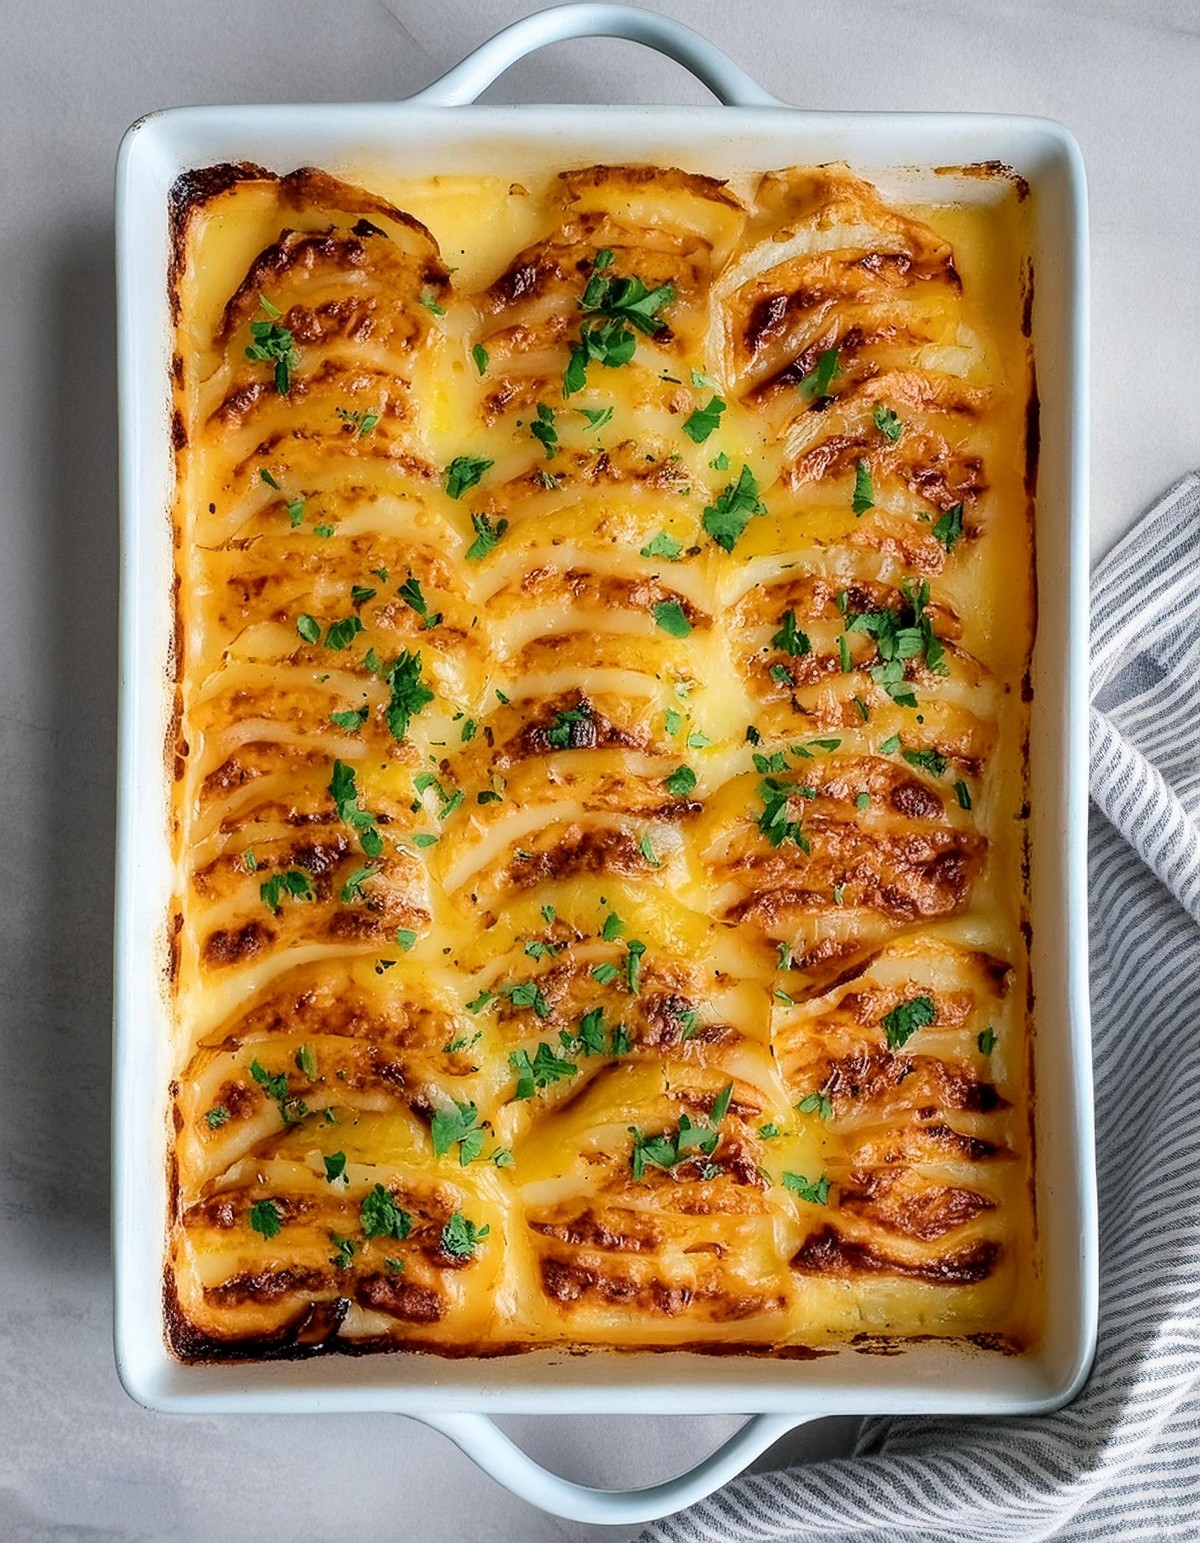 Dad’s Creamy & Cheesy Au Gratin Potatoes Recipe